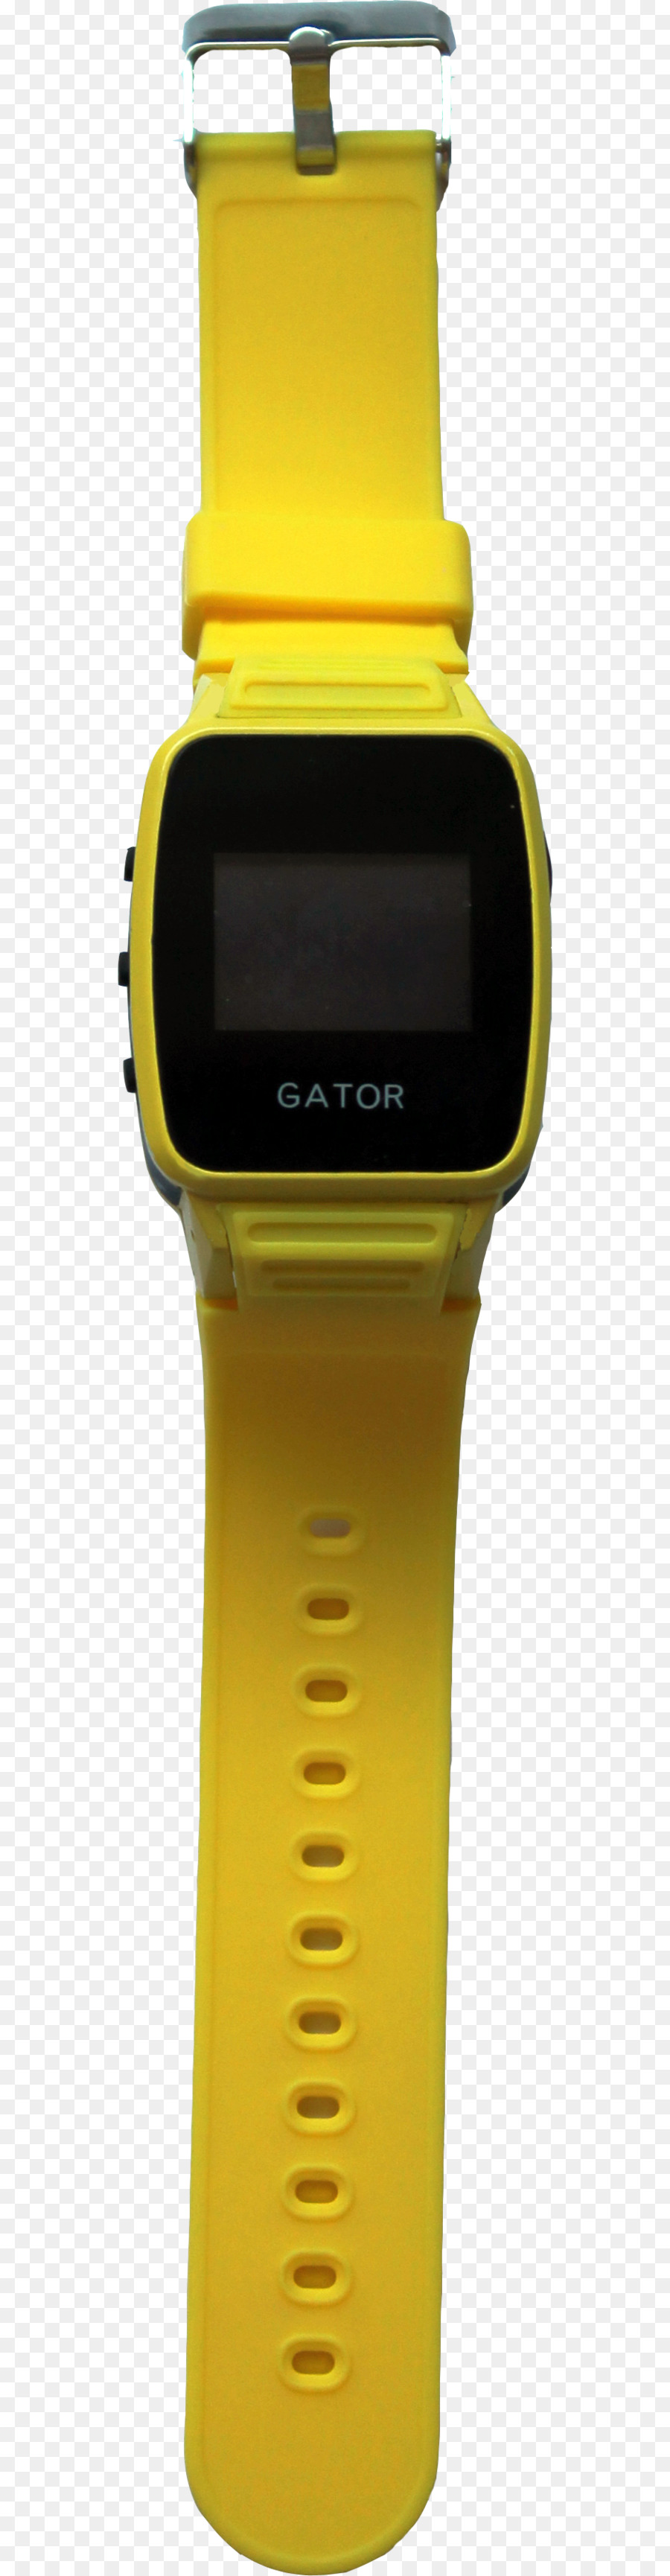 GPS-Navigation-Systeme GPS-watch-GPS-tracking unit Digital-Uhr - Handgelenk band